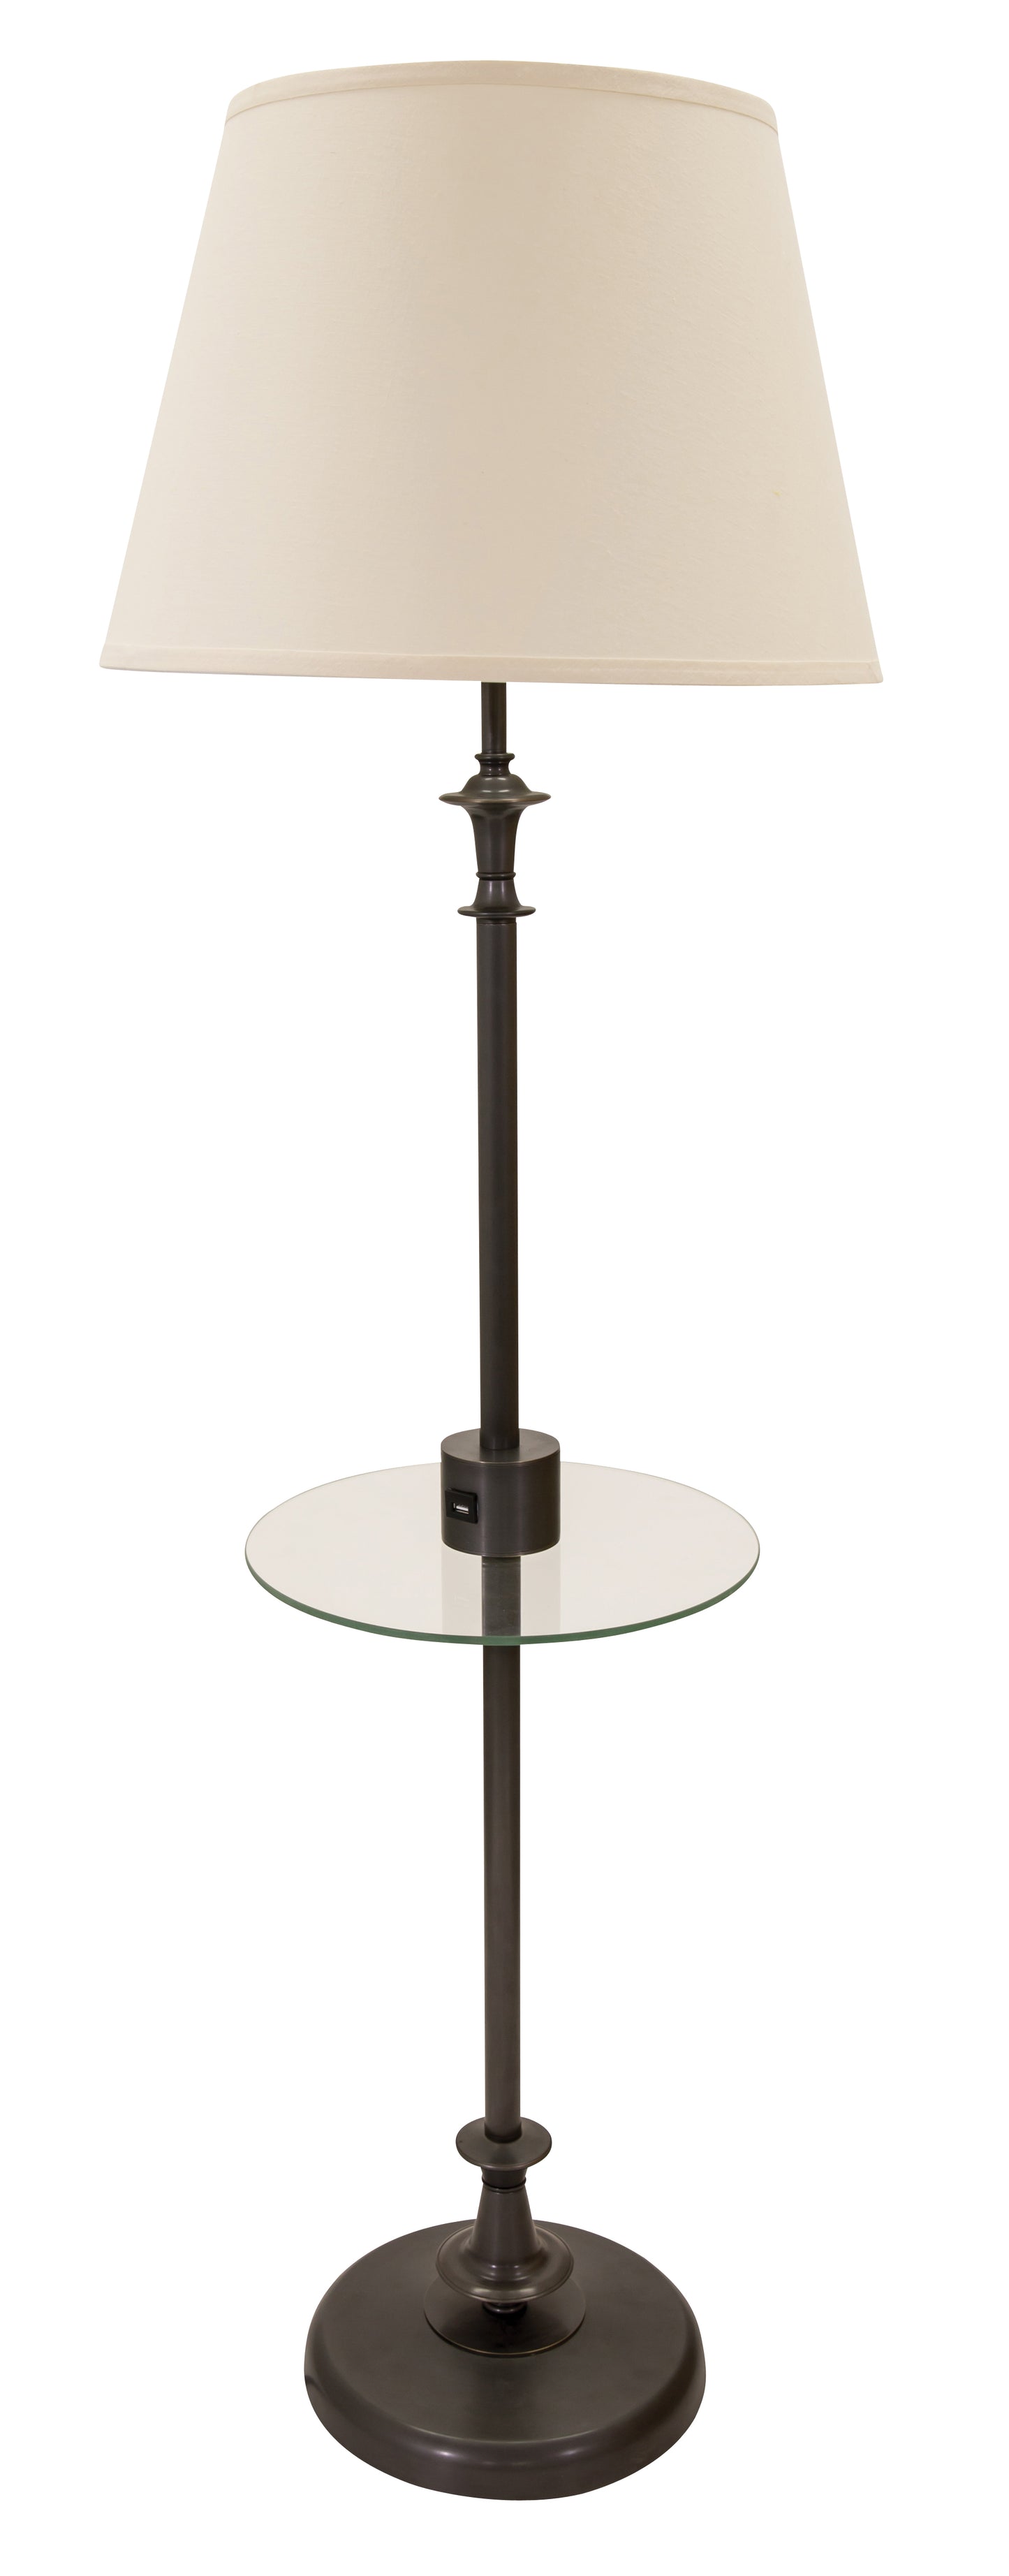 House of Troy Randolph Floor Lamp Table USB Port Oil Rubbed Bronze RA302-OB